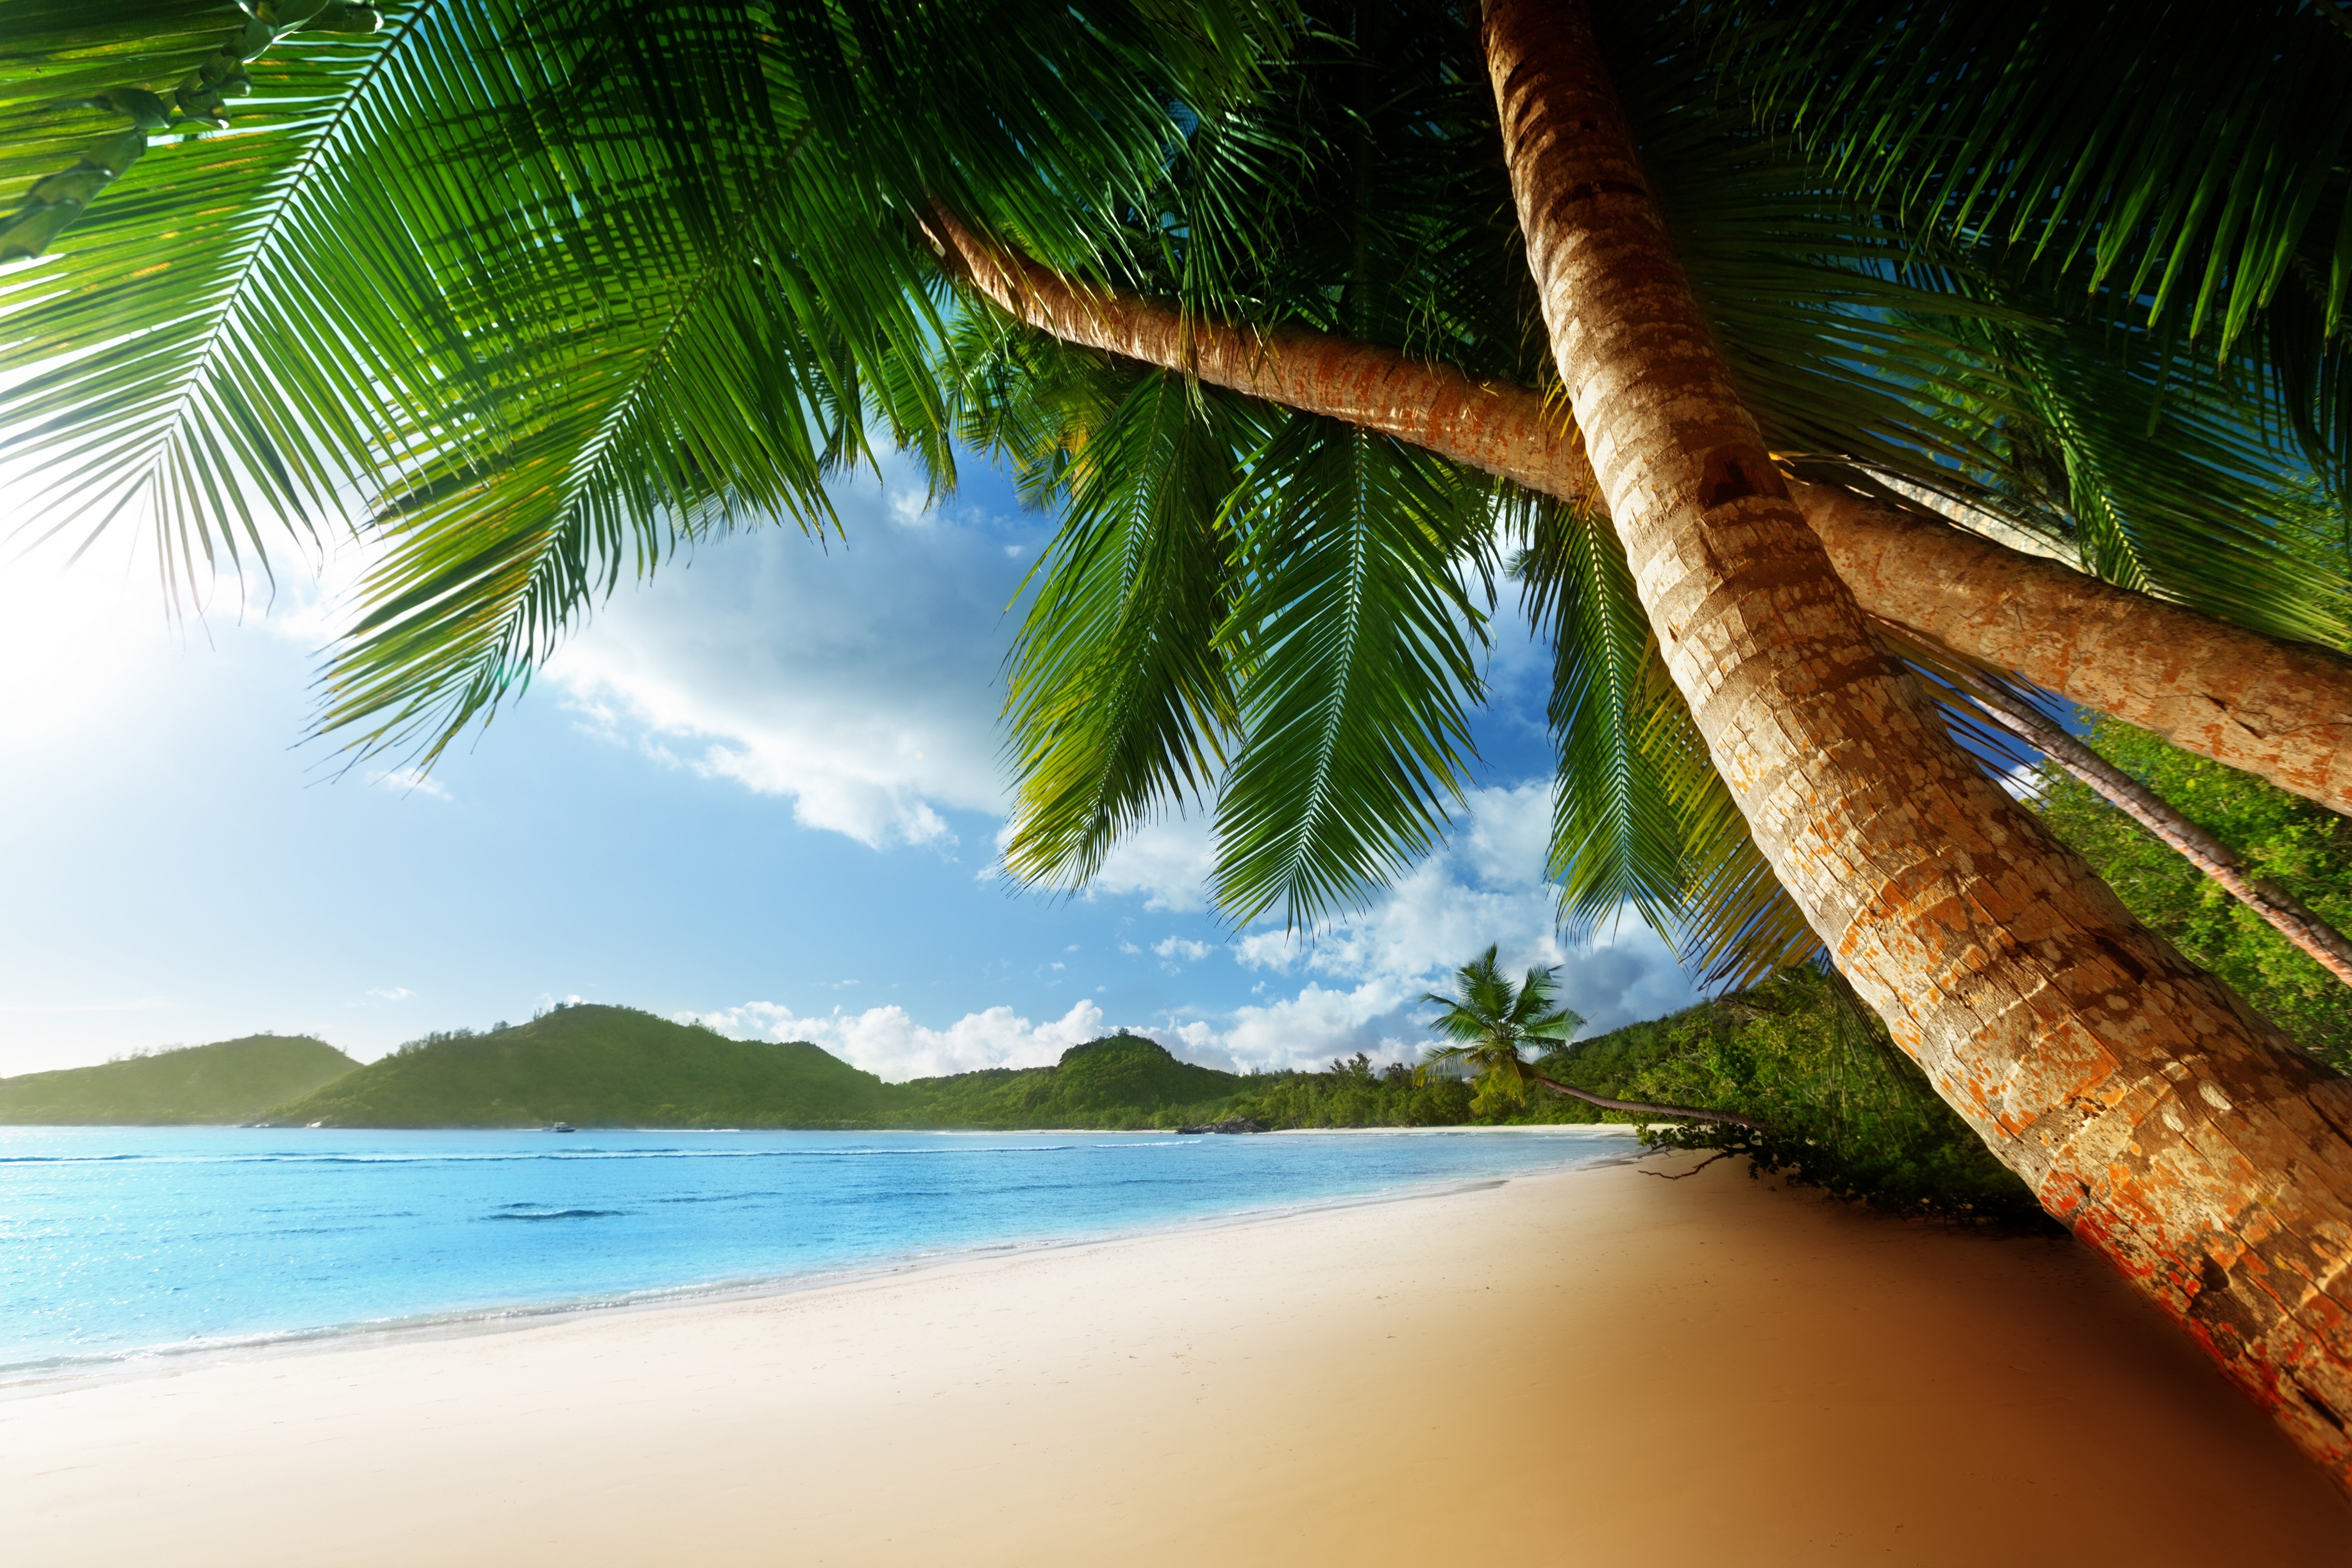 Beach tree. Море пляж. Море пальмы. Пальмы песок. Пляж с пальмами.